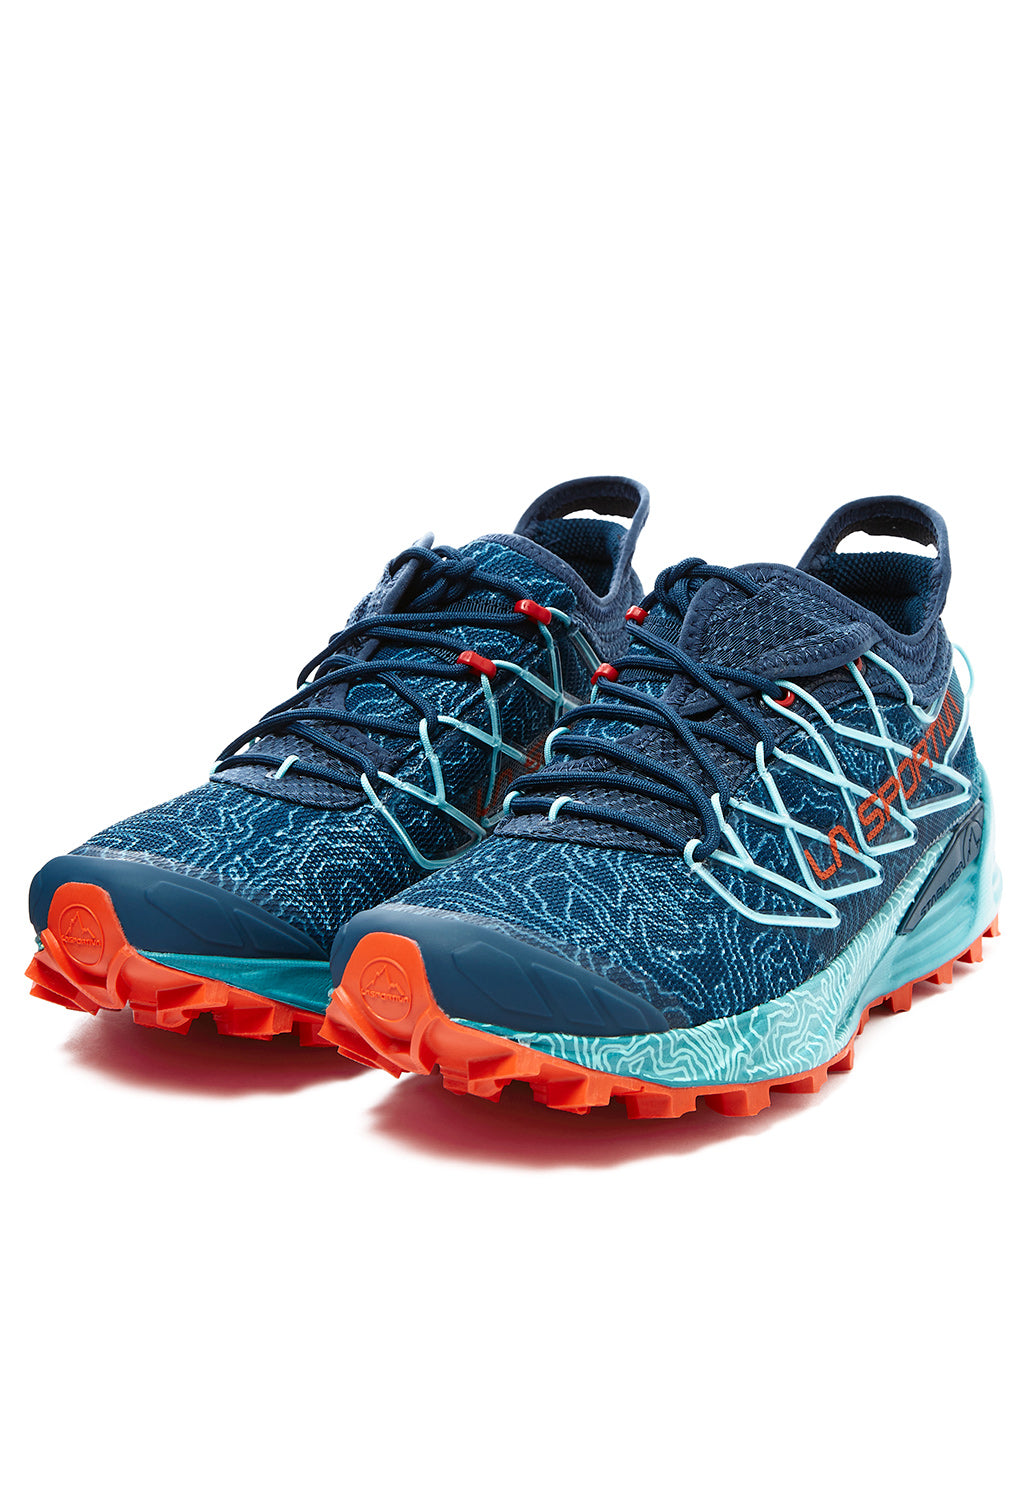 La Sportiva Mutant Women's Trail Shoes - Storm Blue/Cherry Tomato